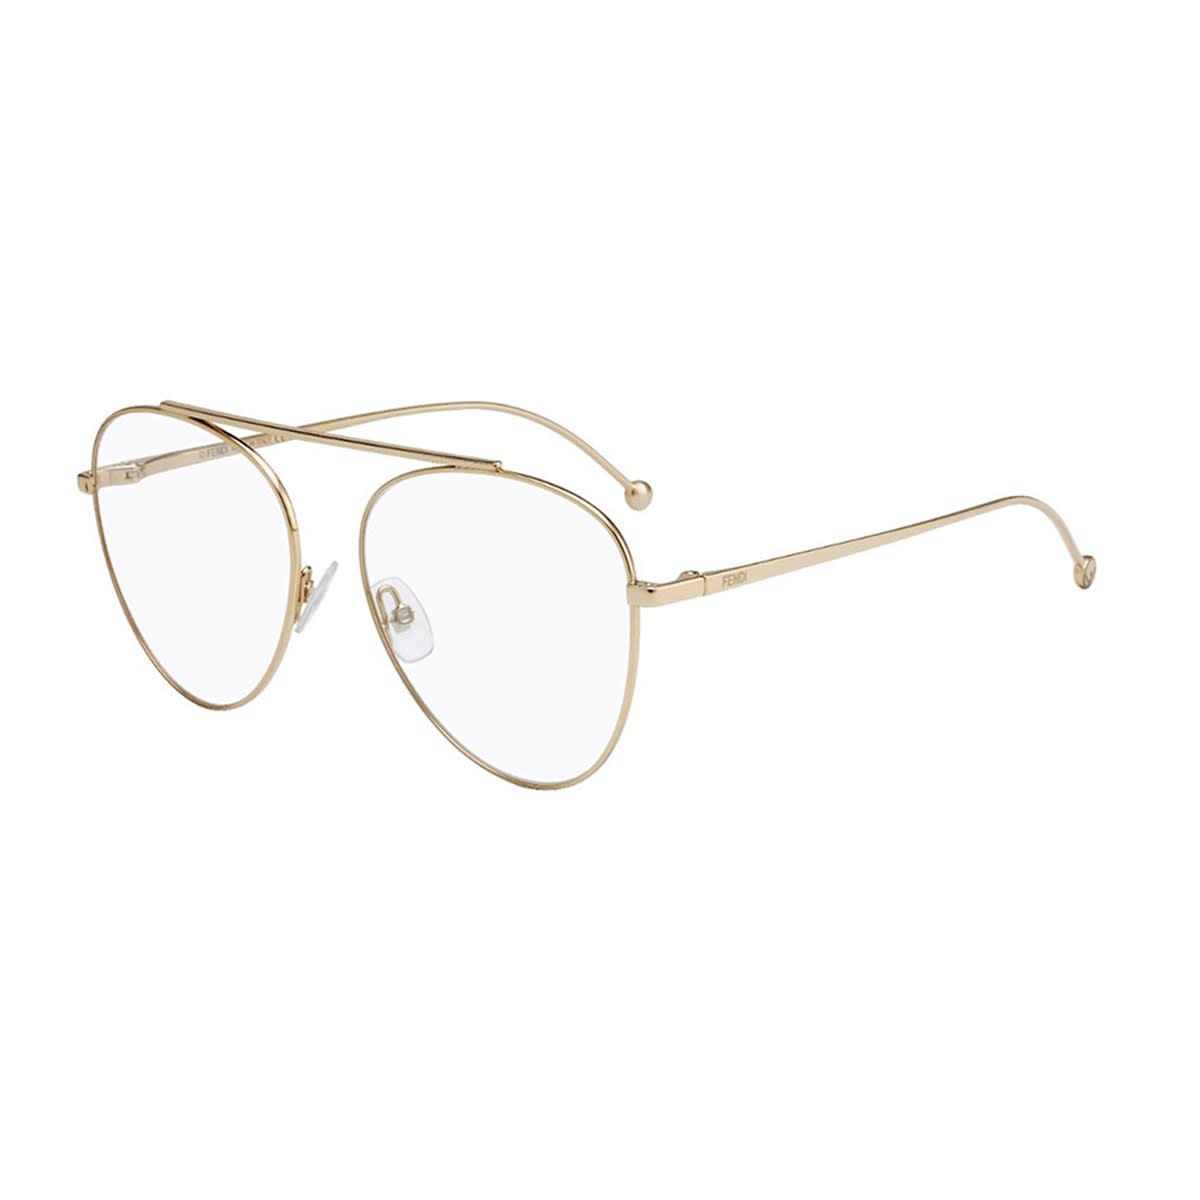 Fendi Eyewear Ff 0352 Glasses